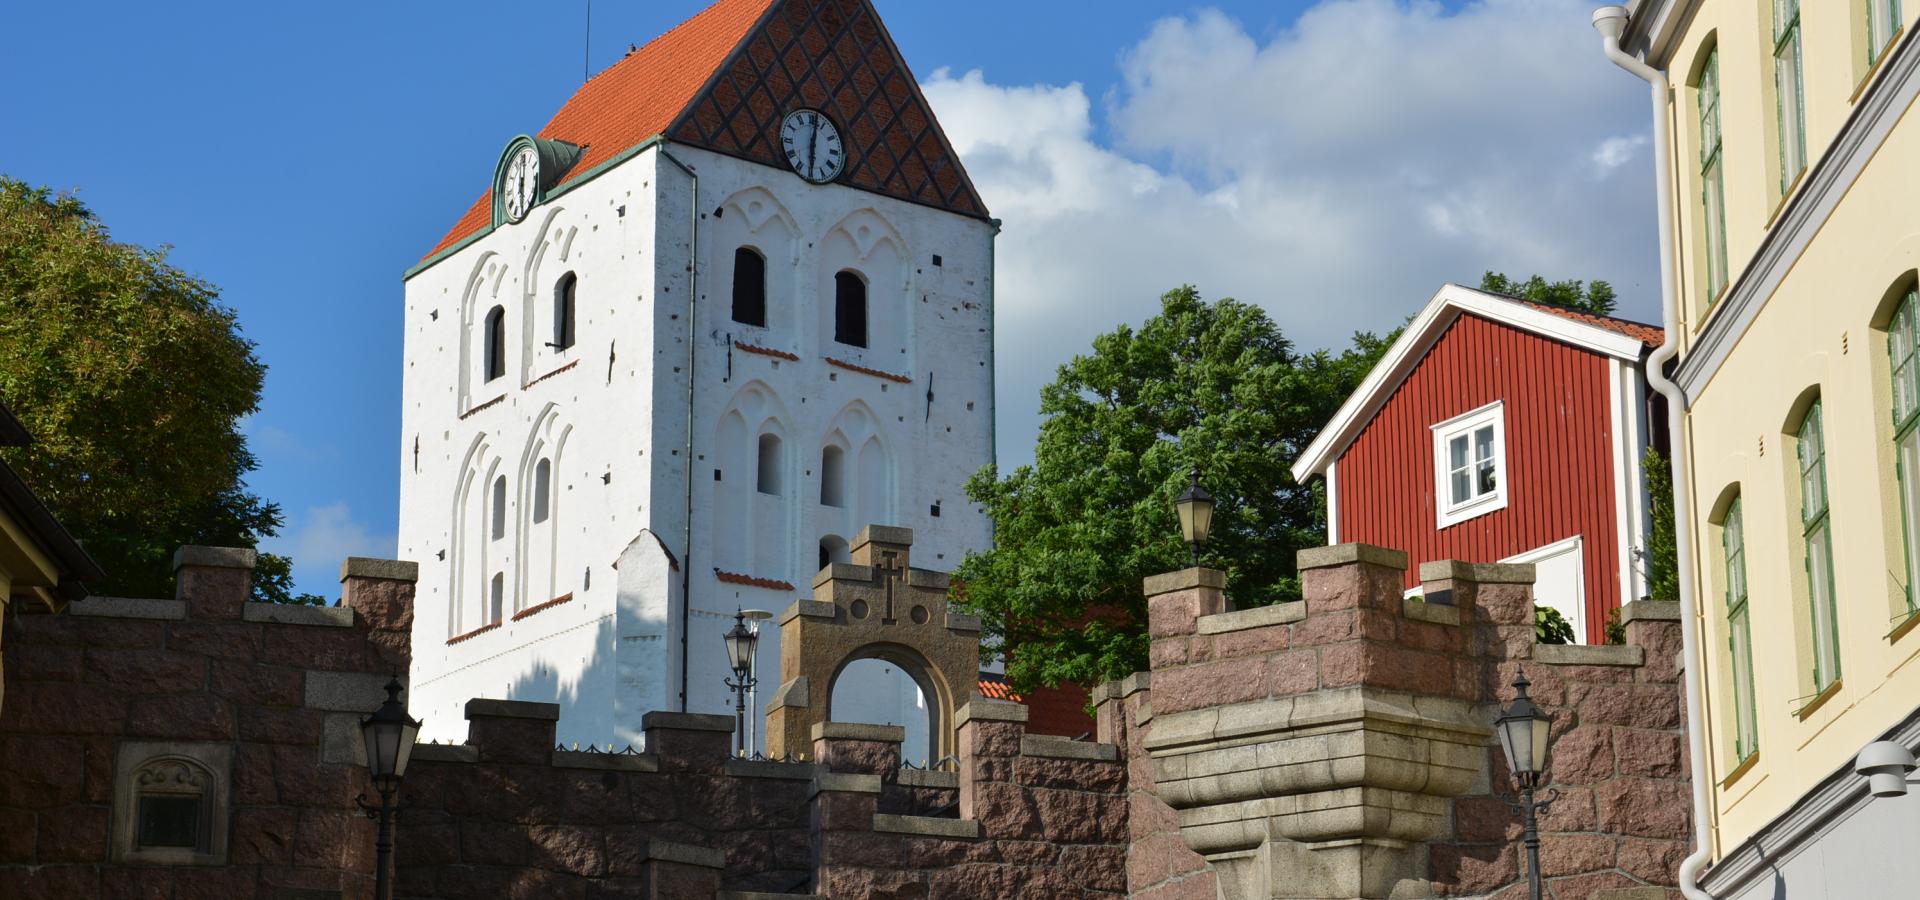 Heliga Kors kyrka i Ronneby